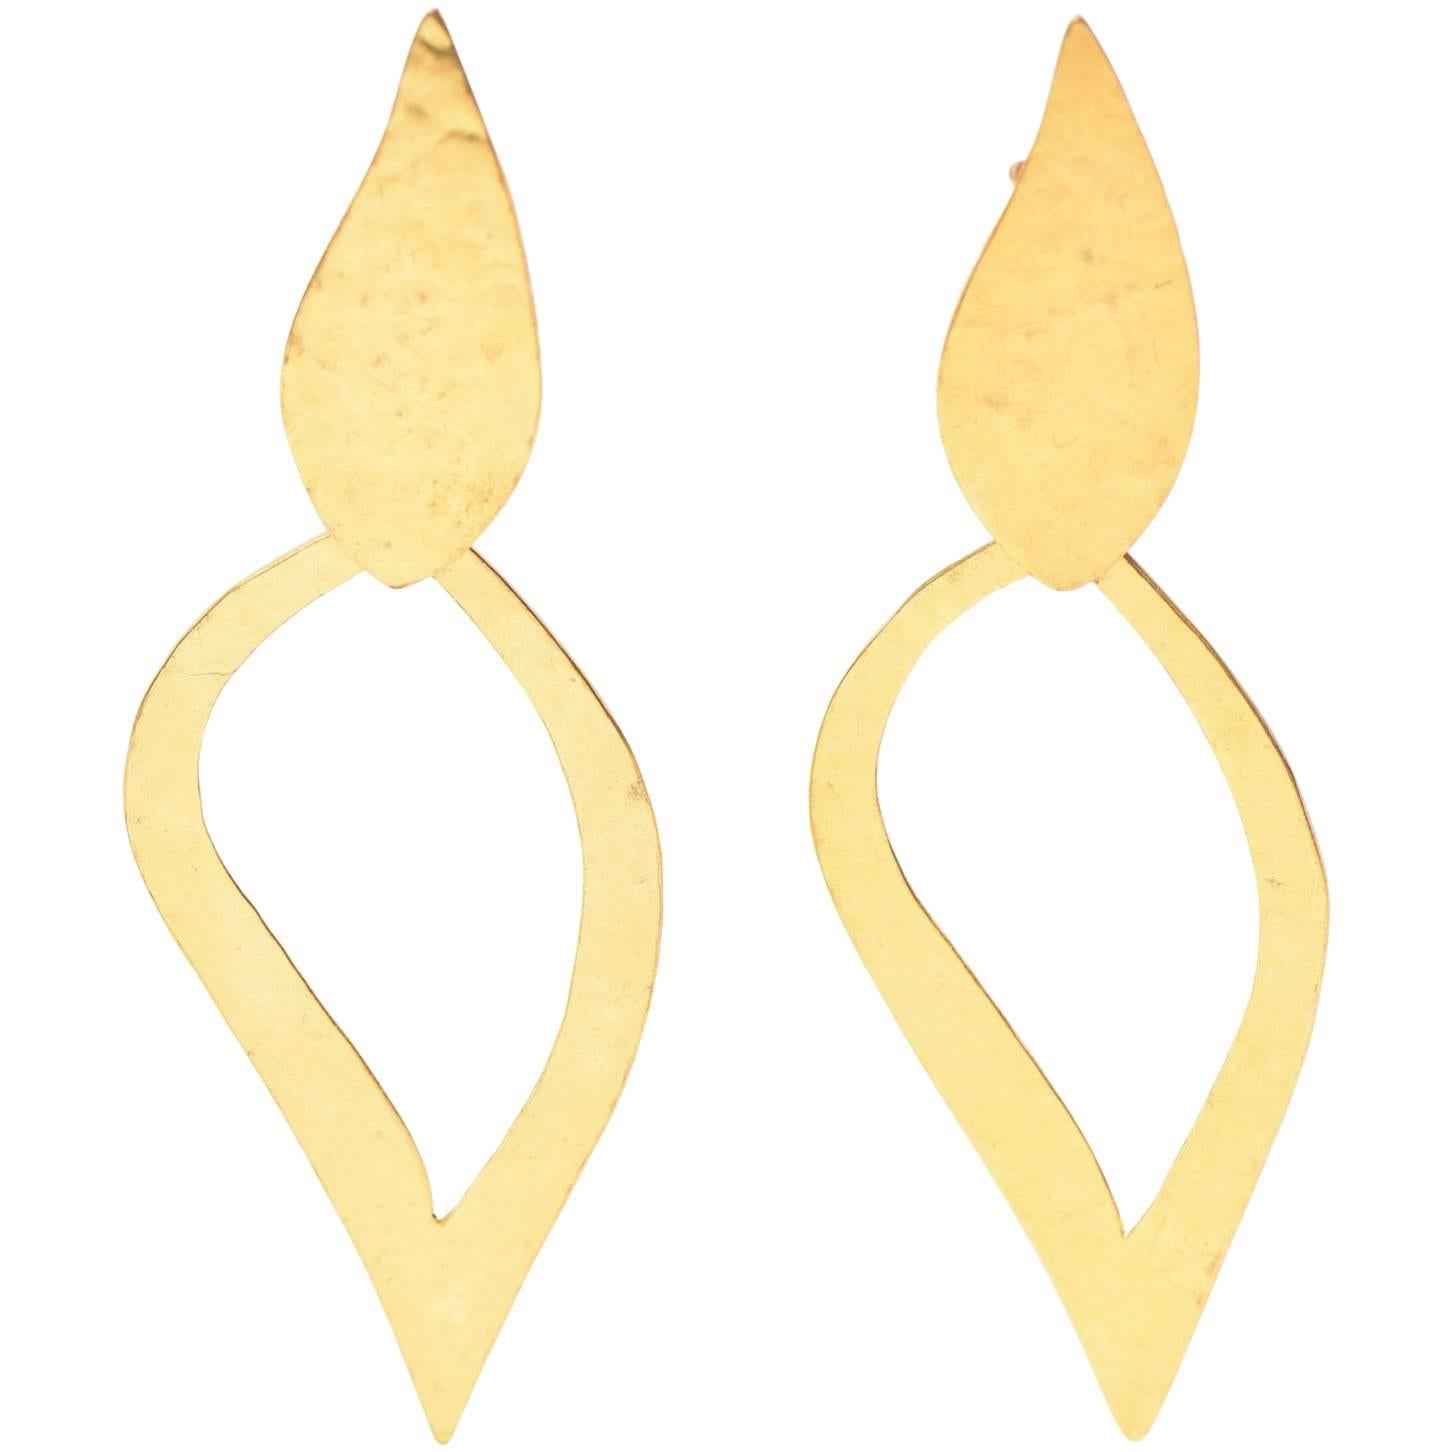 Herve Van Der Straeten Pair of Sculptural Gold Plated Hallmarked Earrings